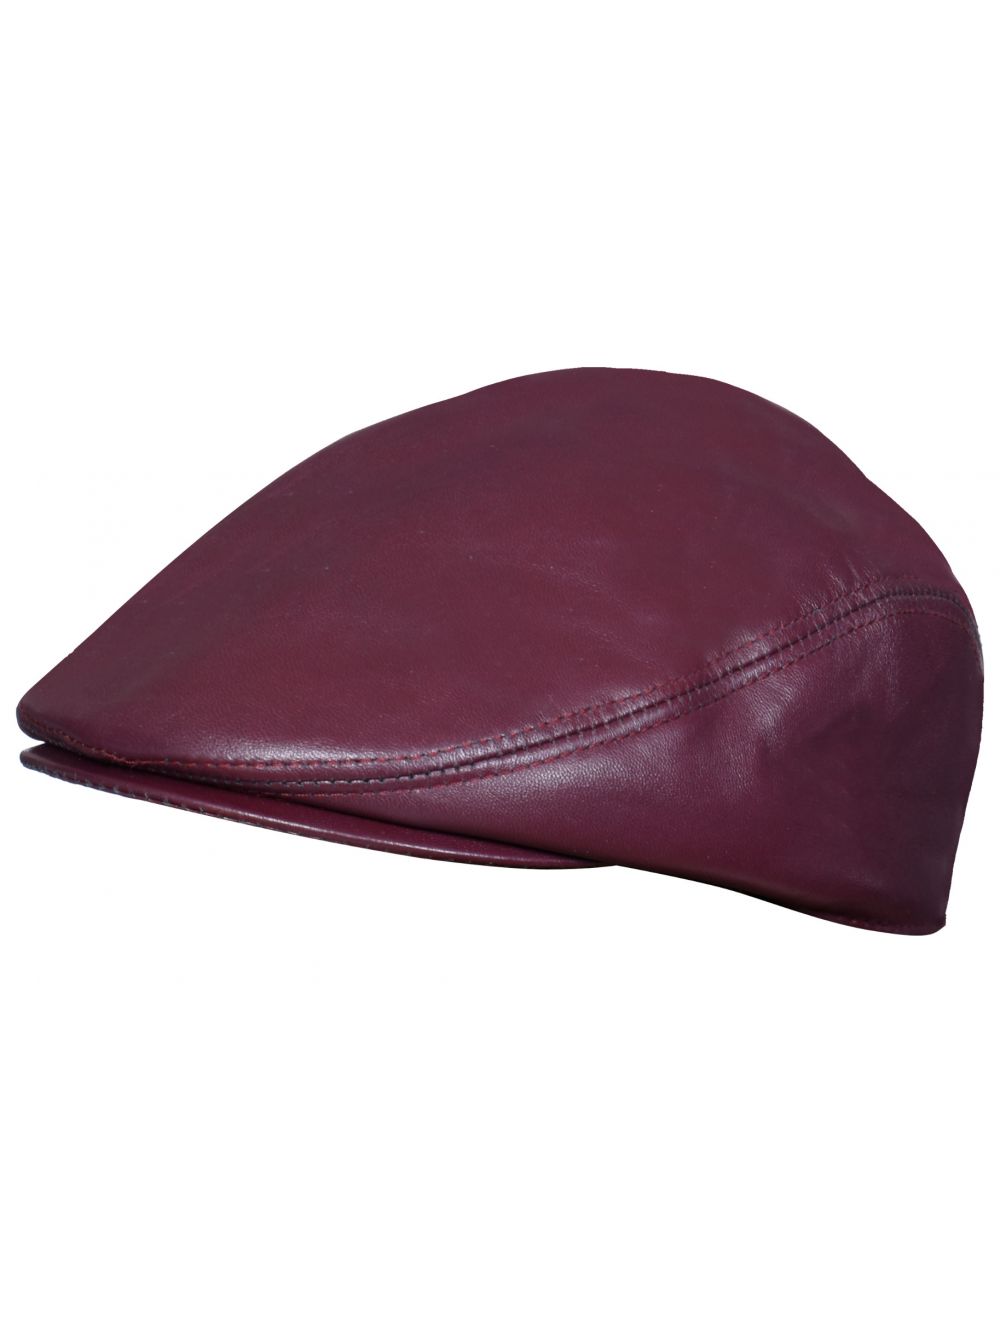 Men's Burgundy Leather Flat Cap